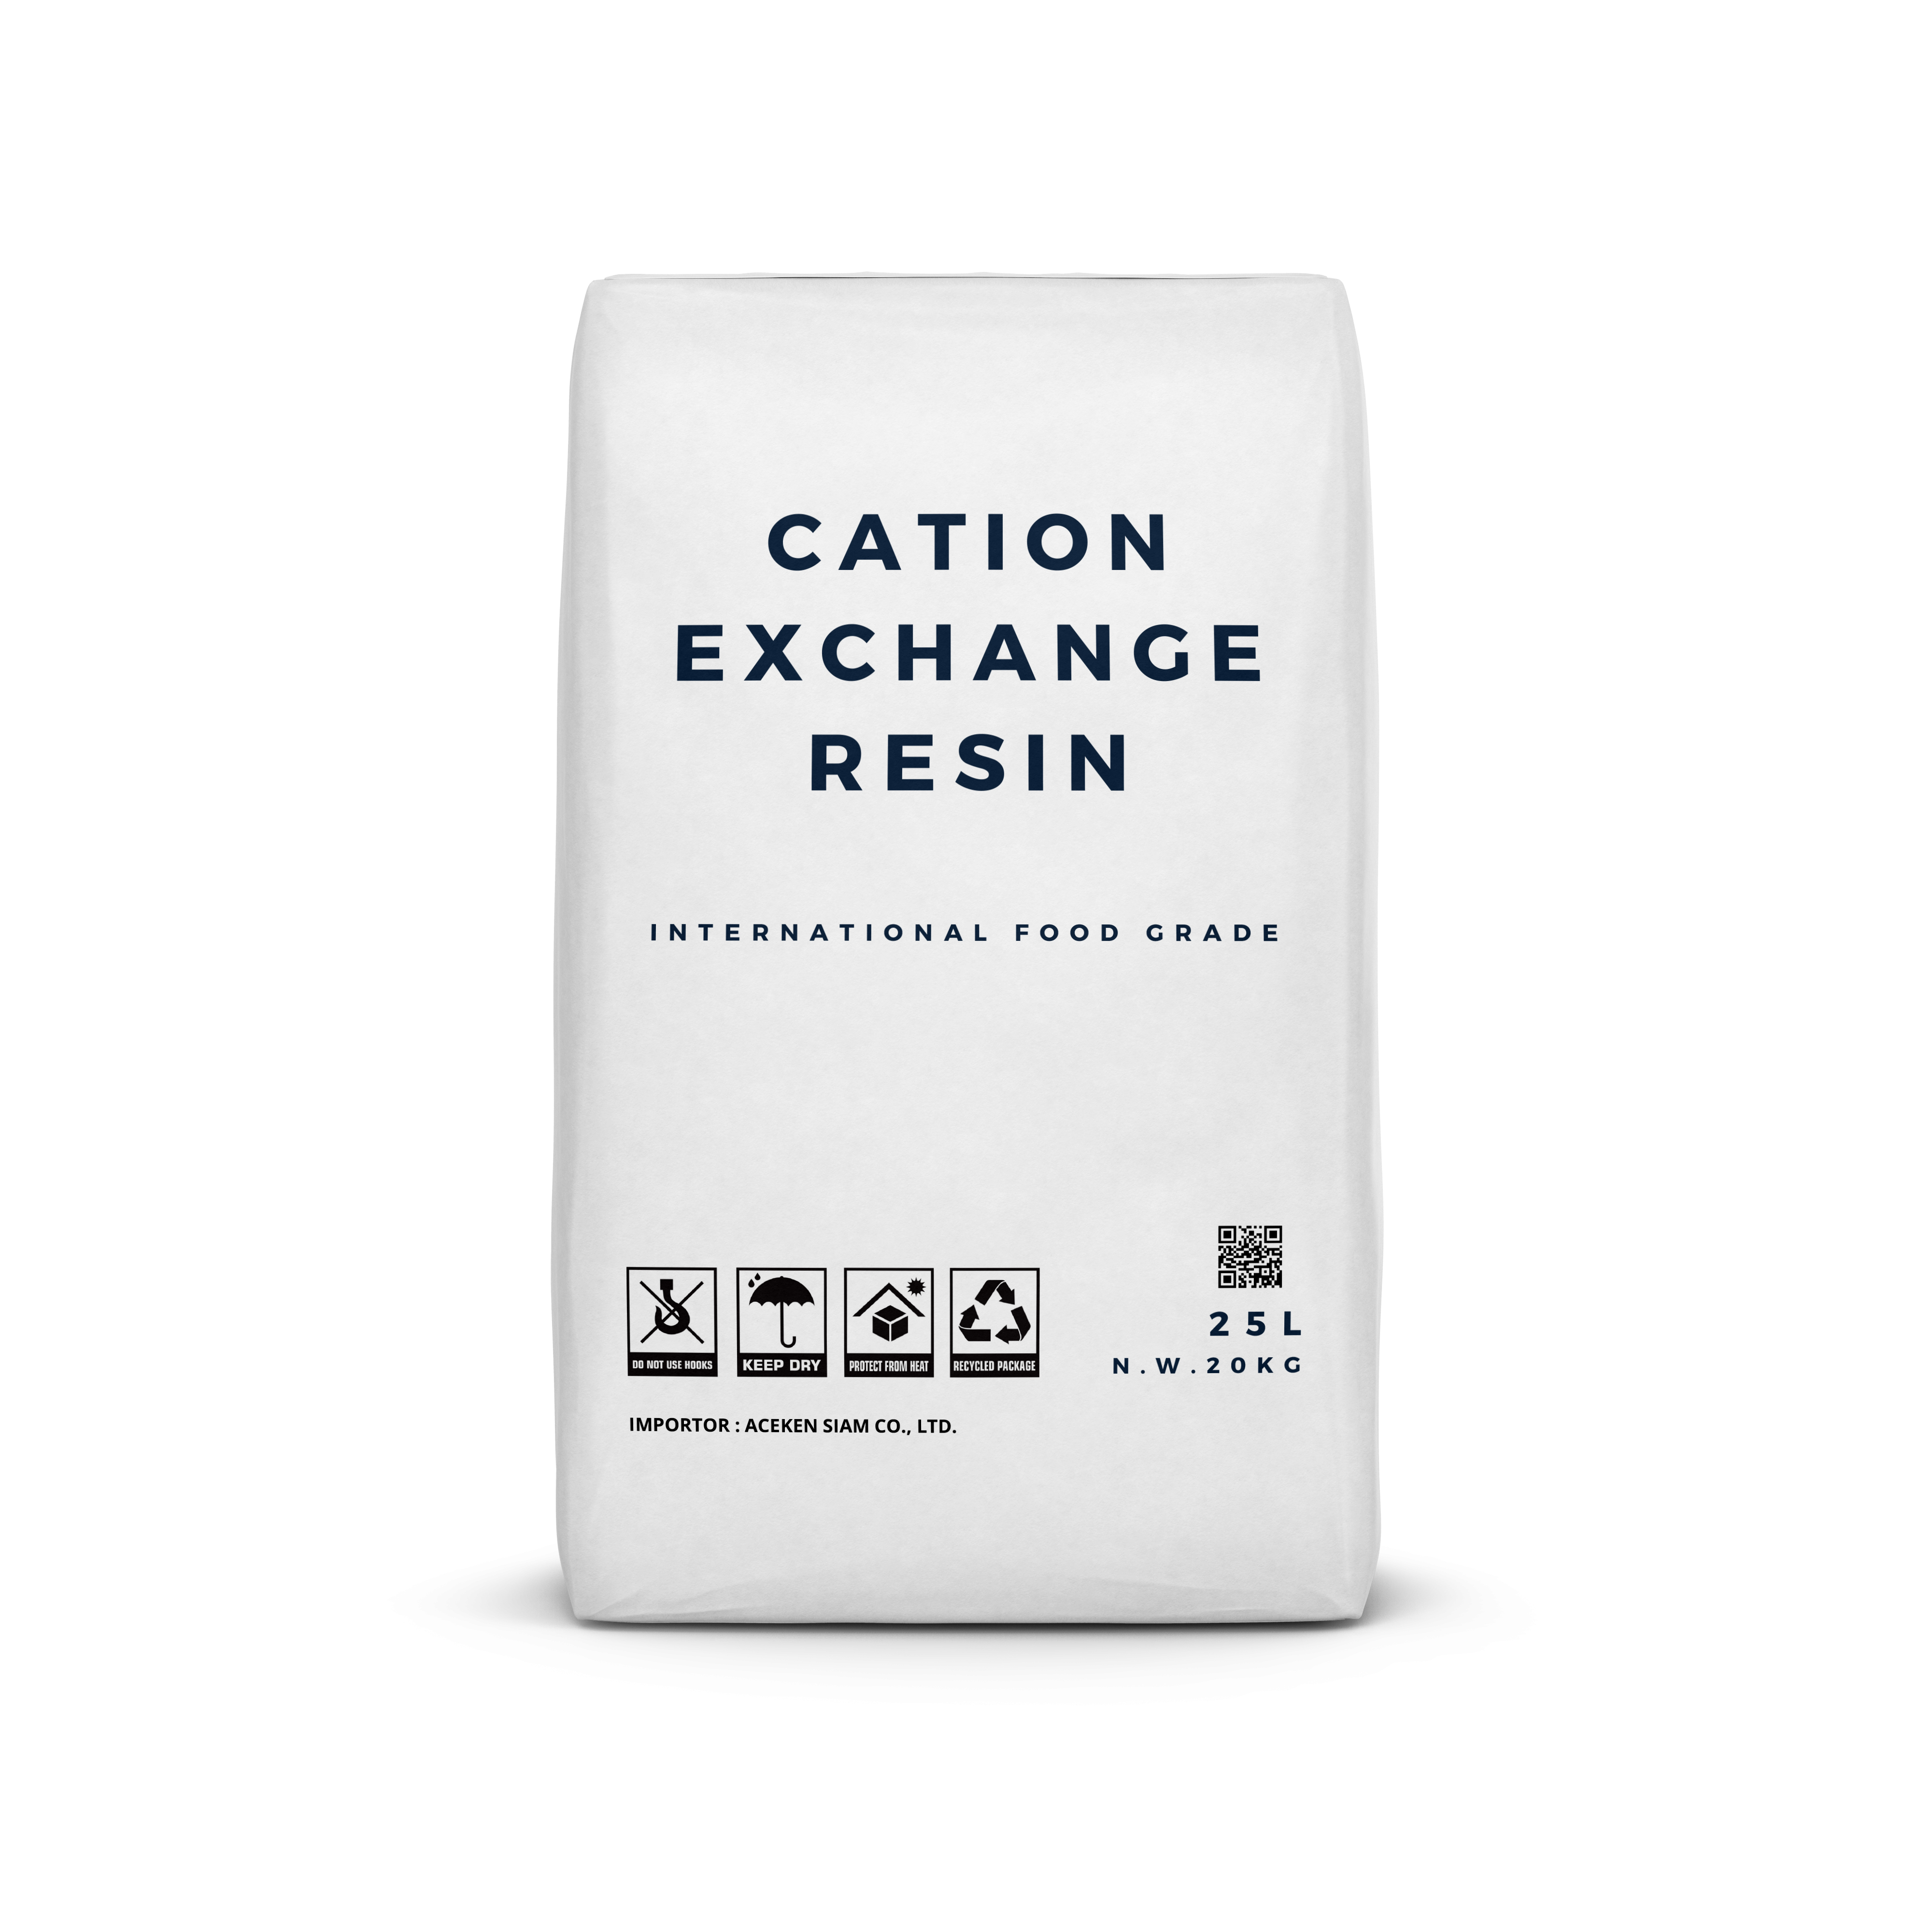 Cation Exchange Resin International Food Grade